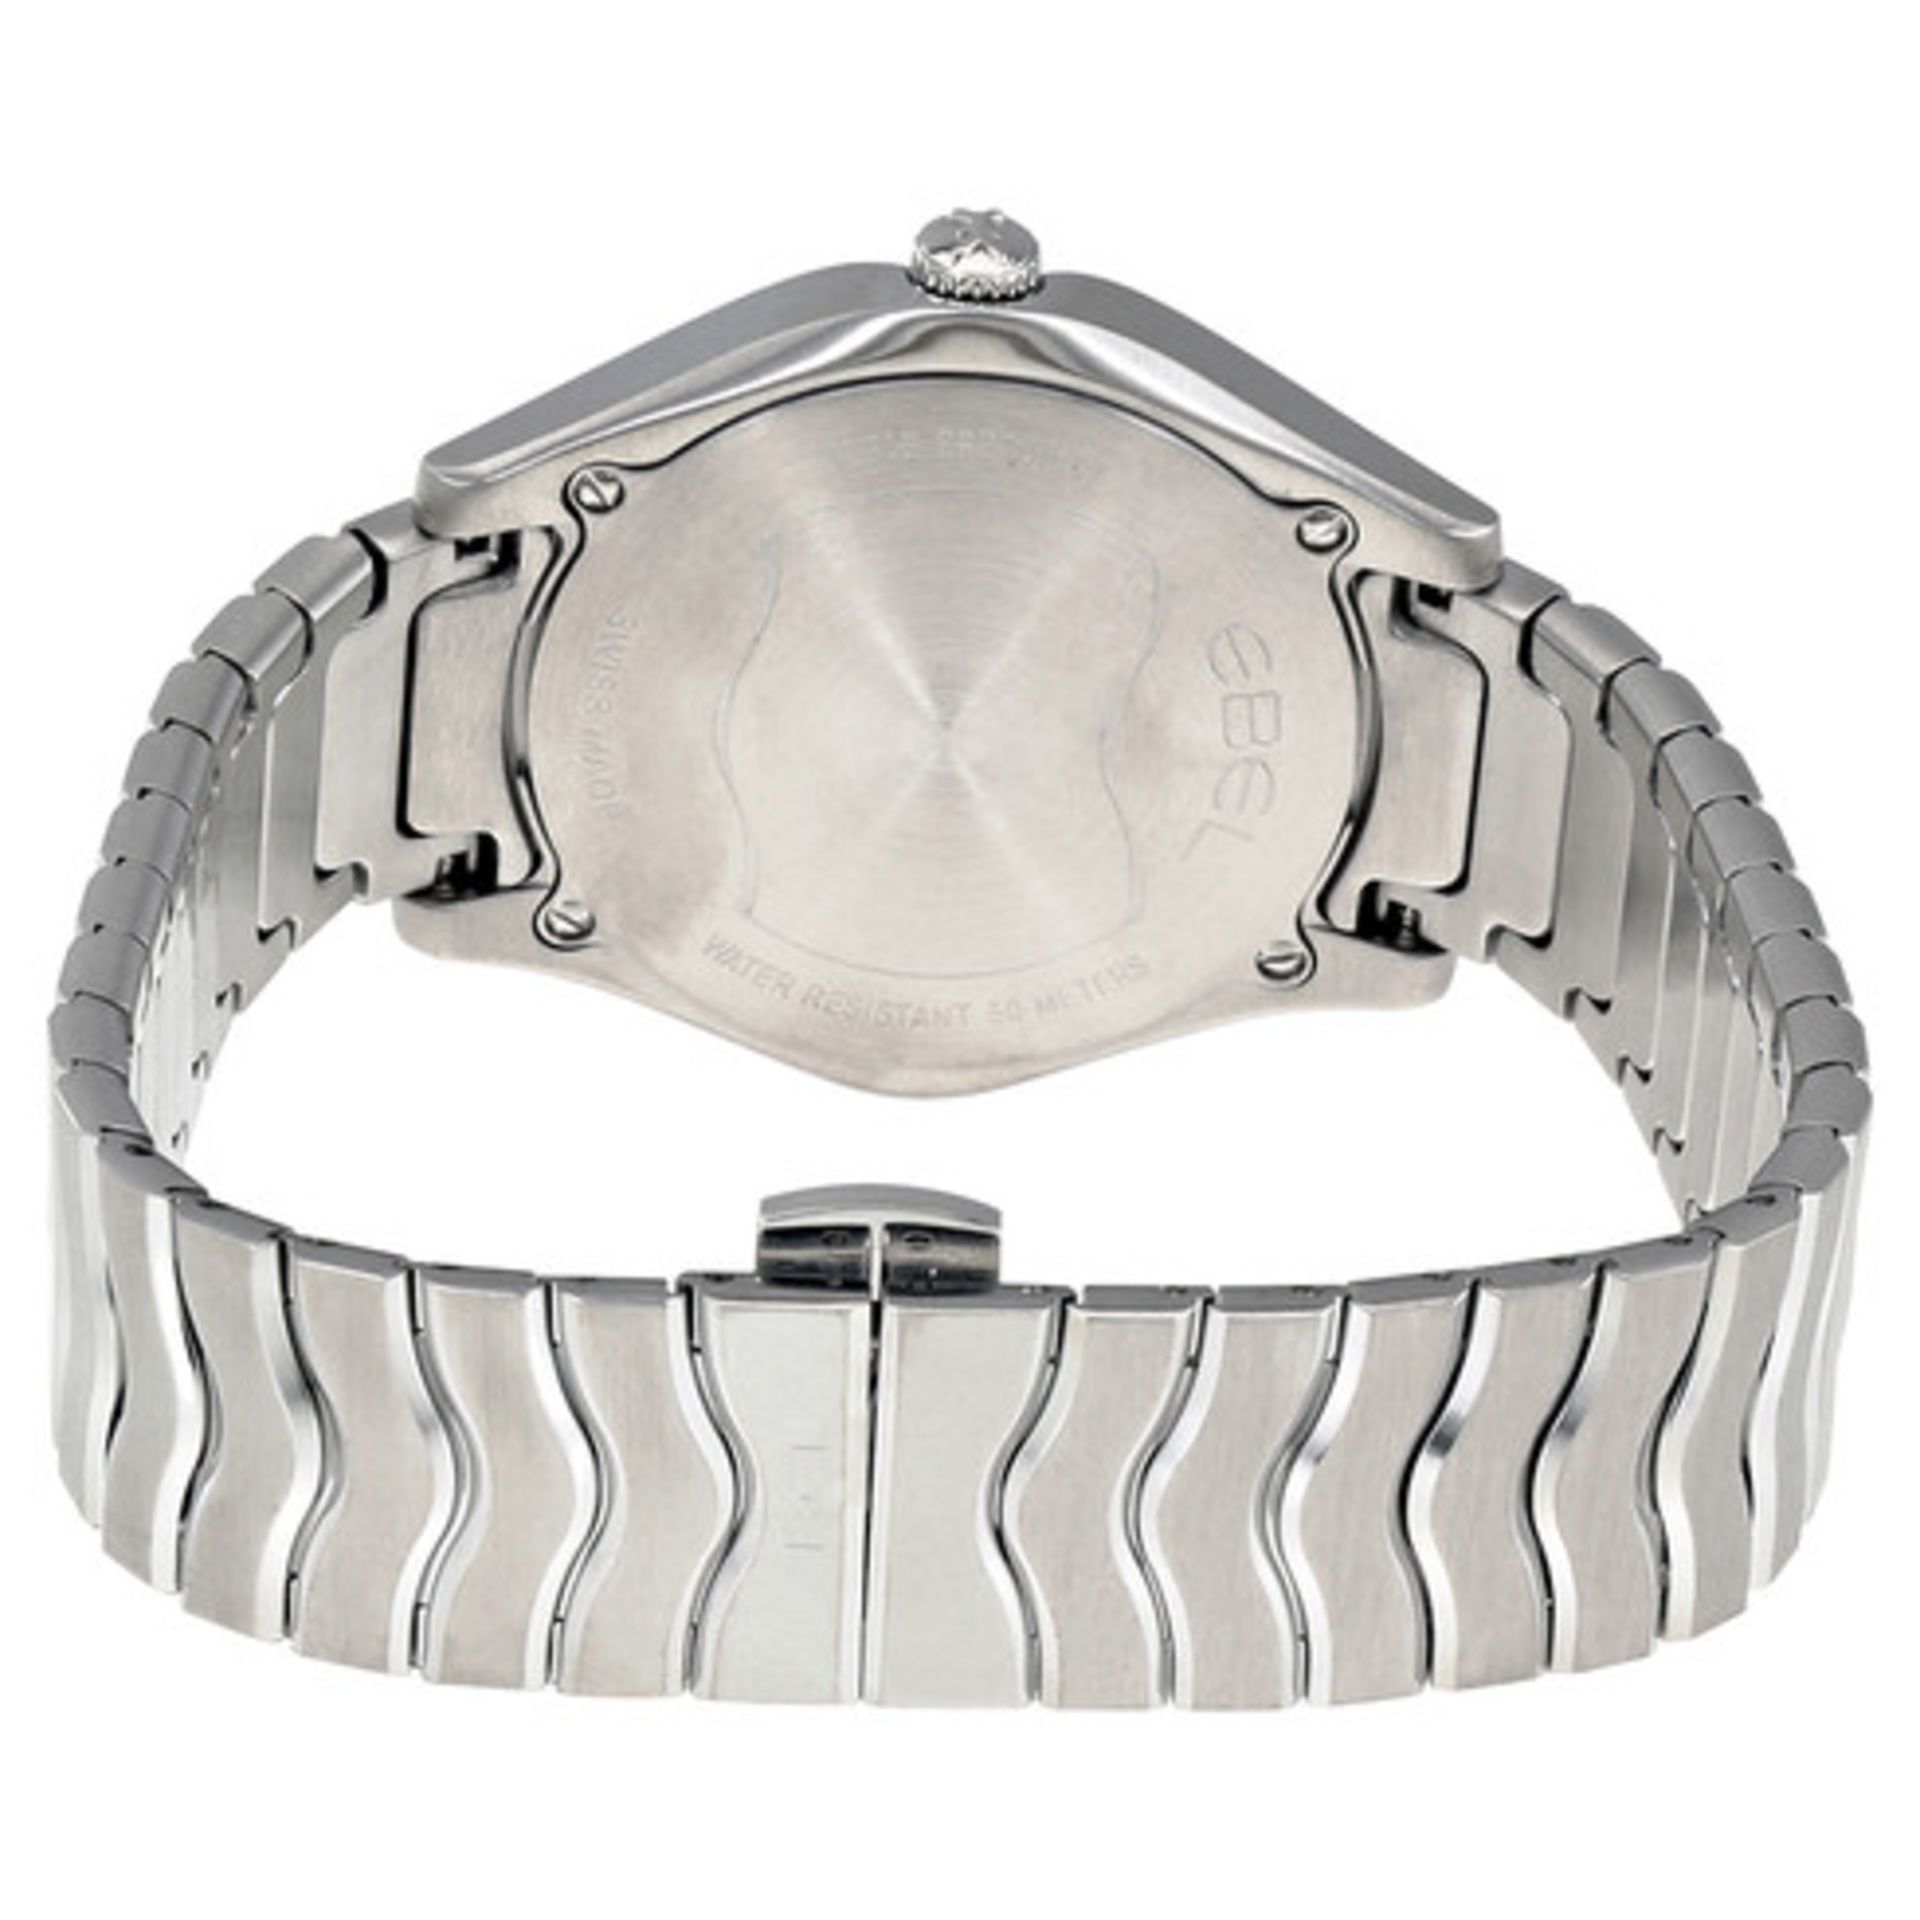 Ebel Ladies Midi 35mm Size Wave Range Watch Reference 1216308, Stainless Steel Bracelet & Case, - Image 5 of 6